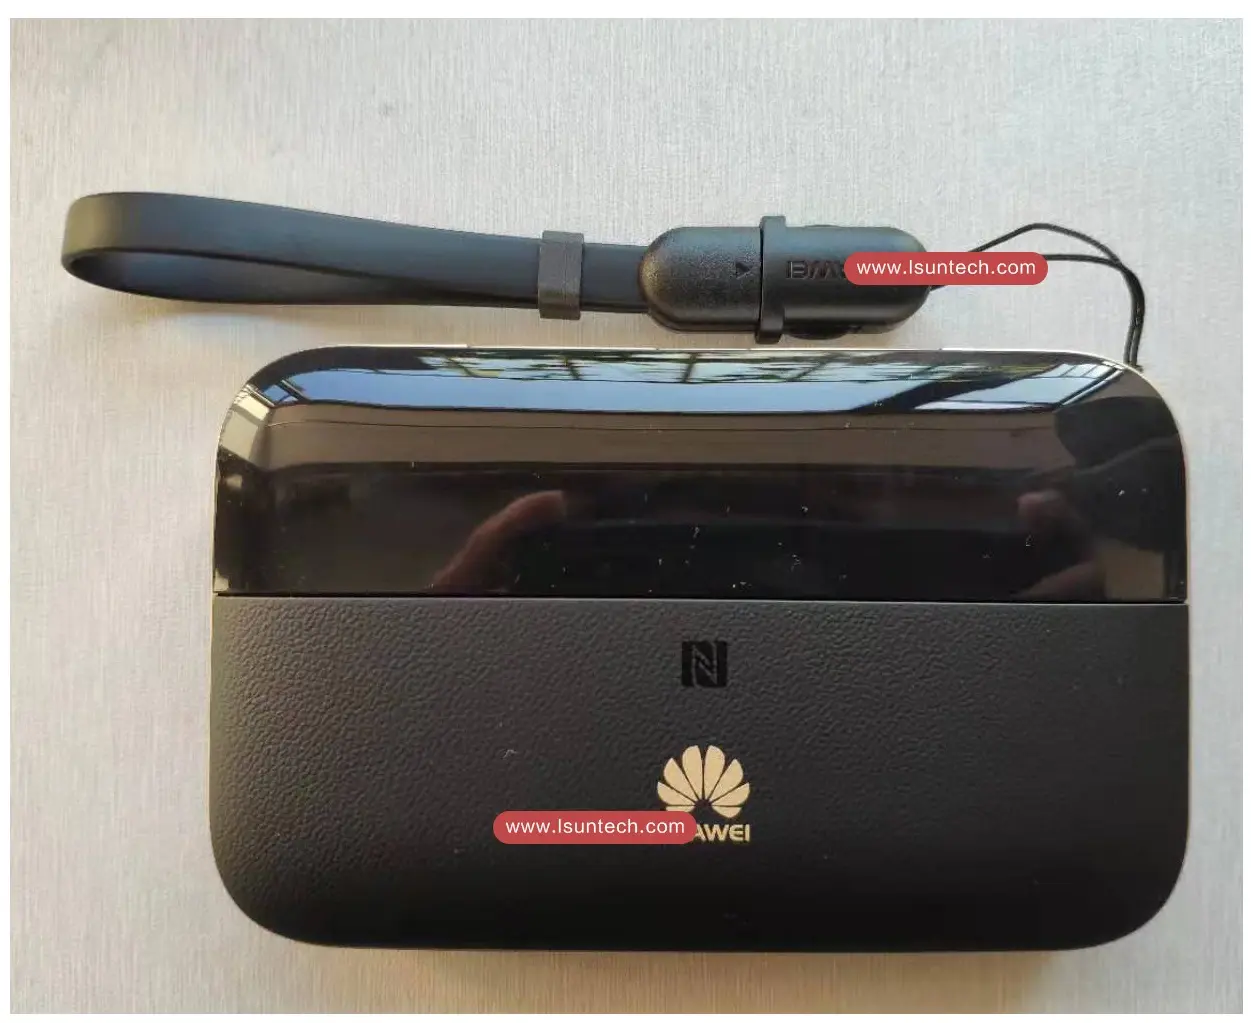 HW E5885 موبايل واي فاي برو 2 ، E5885ls-93a-Portable الاتصال بشبكة الجيل الرابع ال تي اي 4g lte موزع إنترنت واي فاي نقطة ساخنة مع rj45 منفذ wan ، HW E5885 الاتصال بشبكة الجيل الرابع ال تي اي 4G LTE Cat6